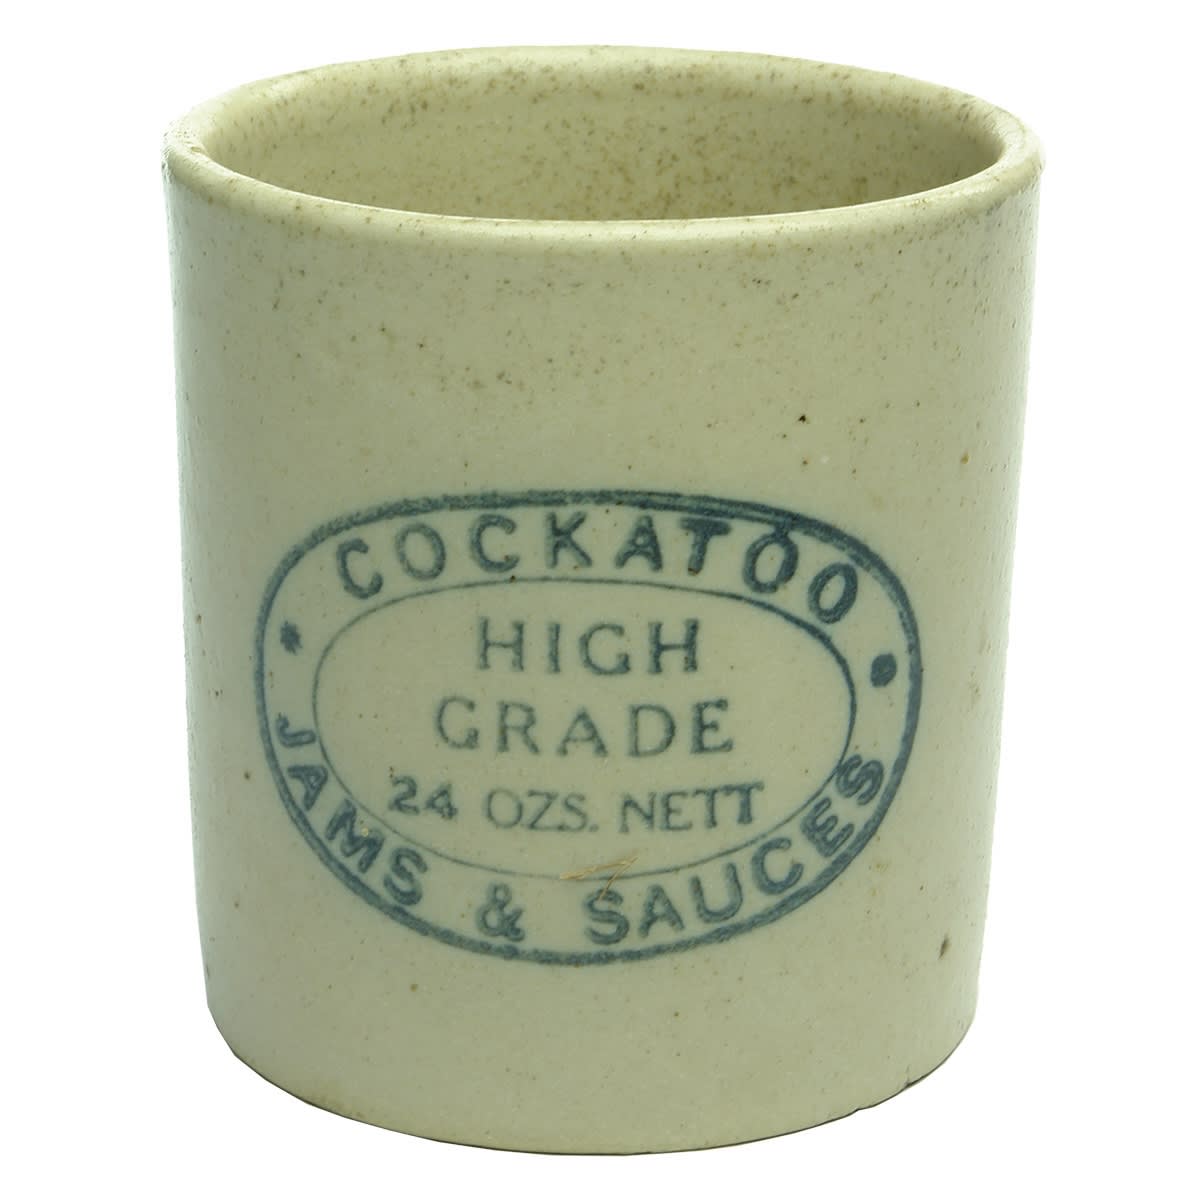 Jar. Cockatoo High Grade Jams & Sauces. 24 oz. (Victoria)